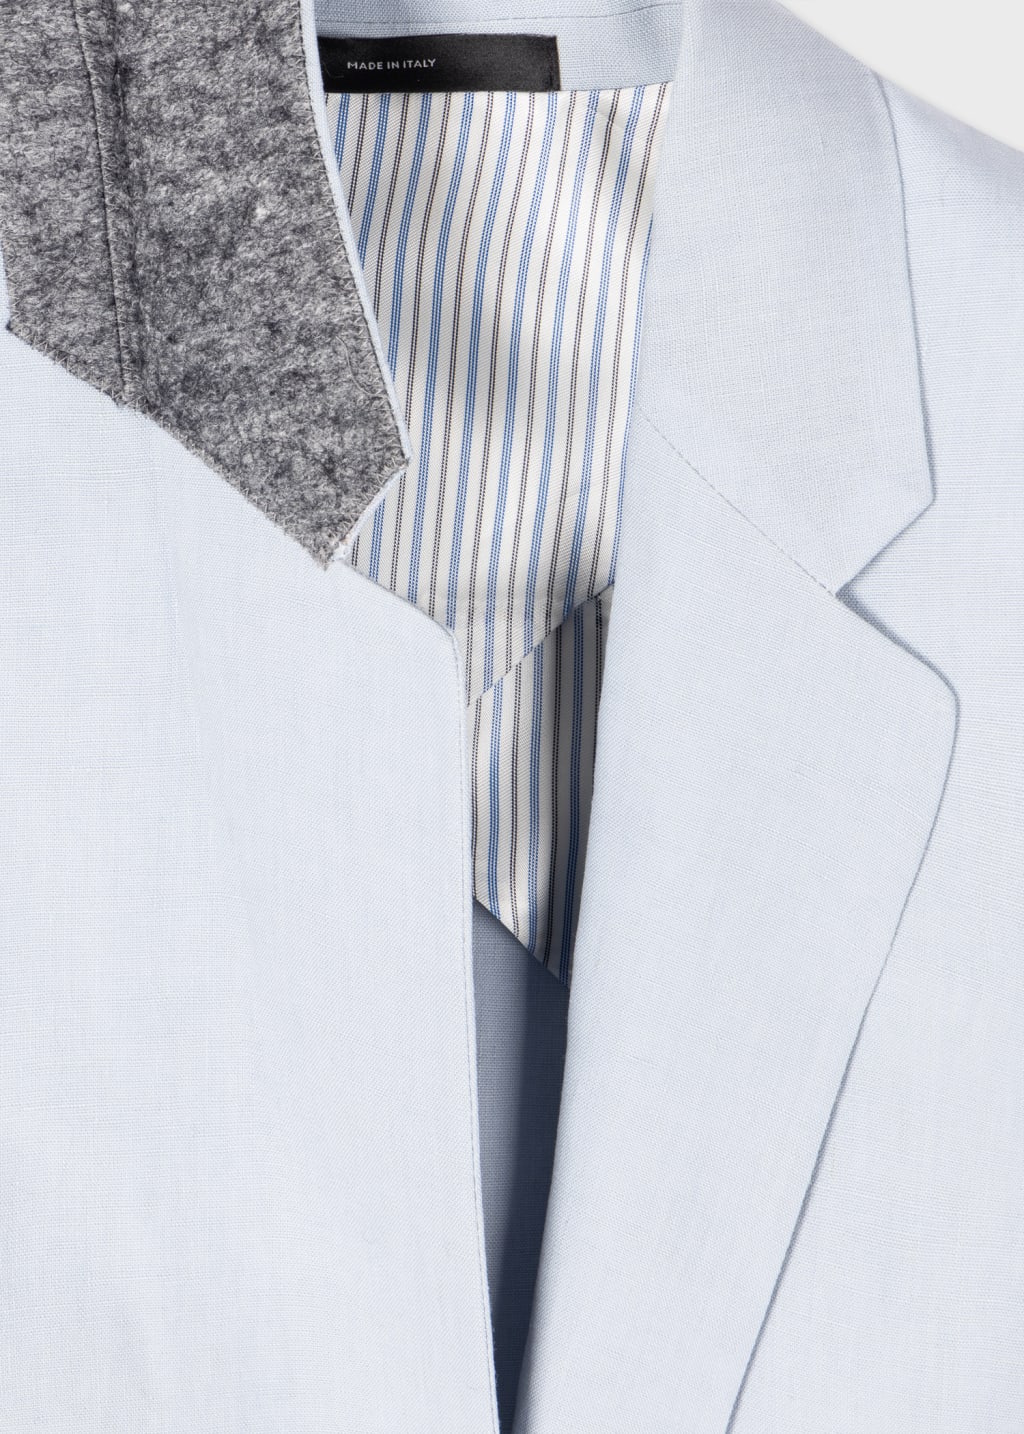 Model View - Women's Pale Blue Linen One-Button Blazer by Paul Smith